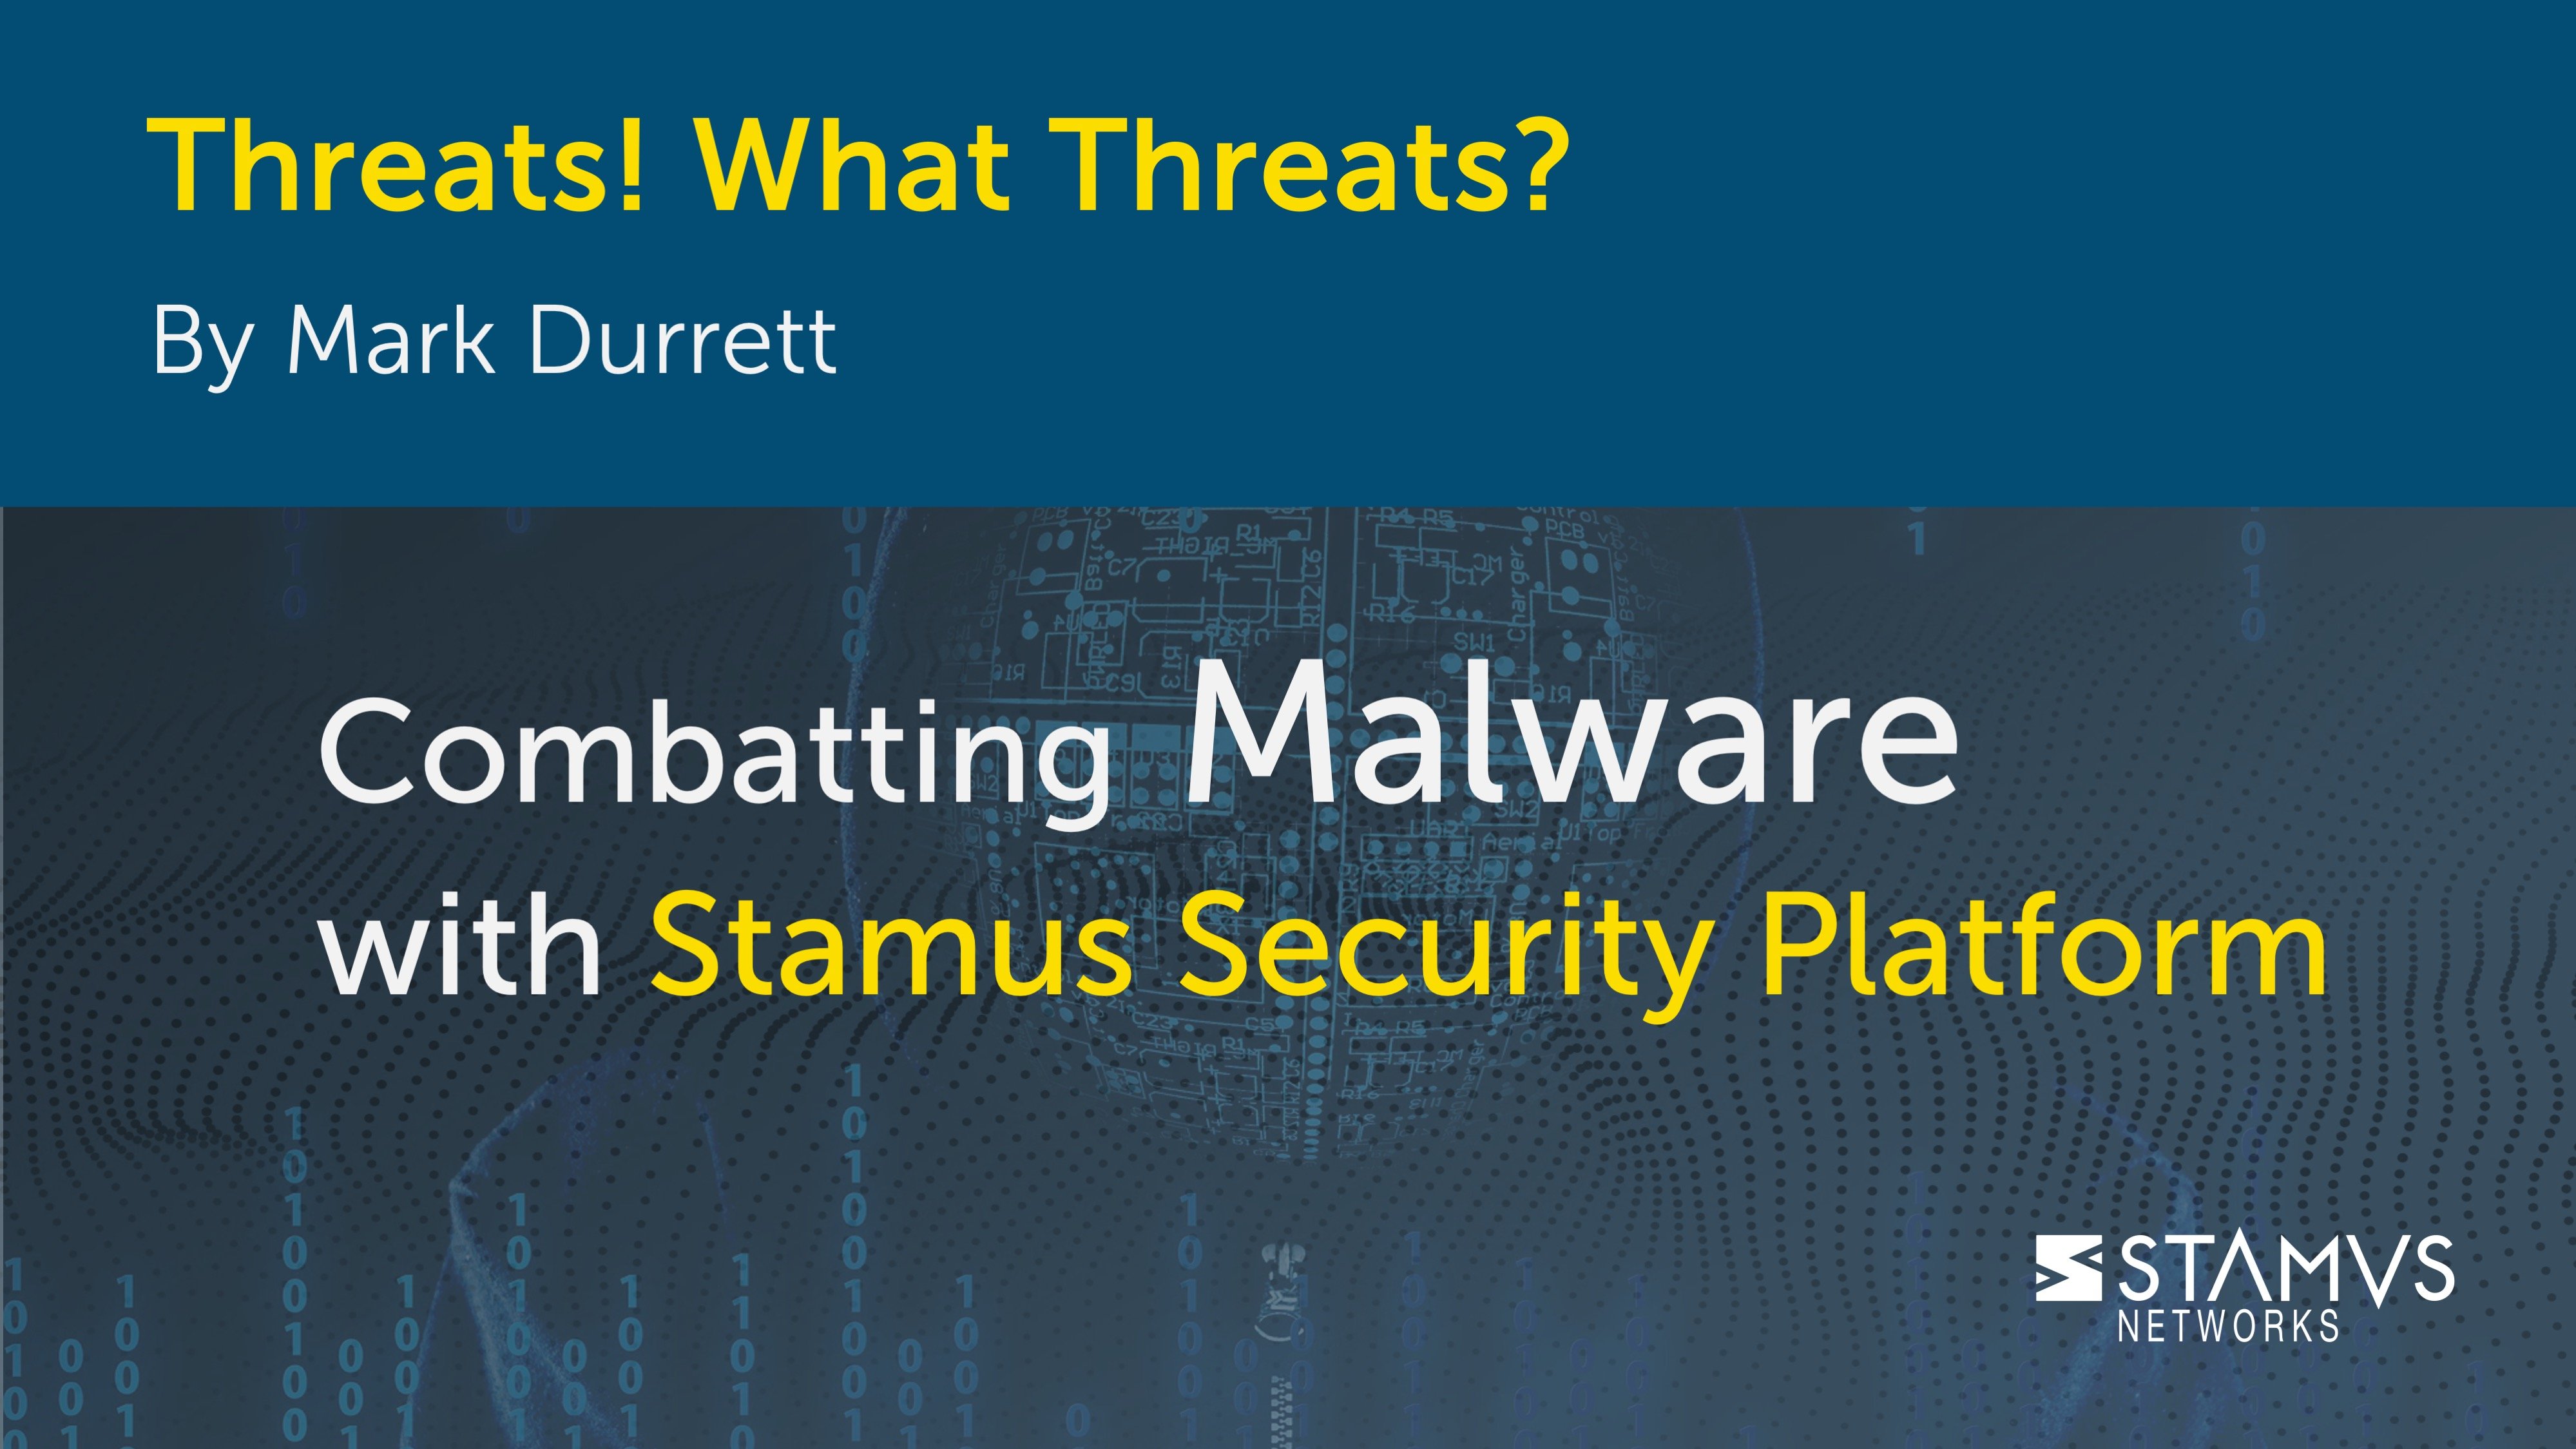 Threats! What Threats? Combatting Malware with Stamus Security Platform by Mark Durrett